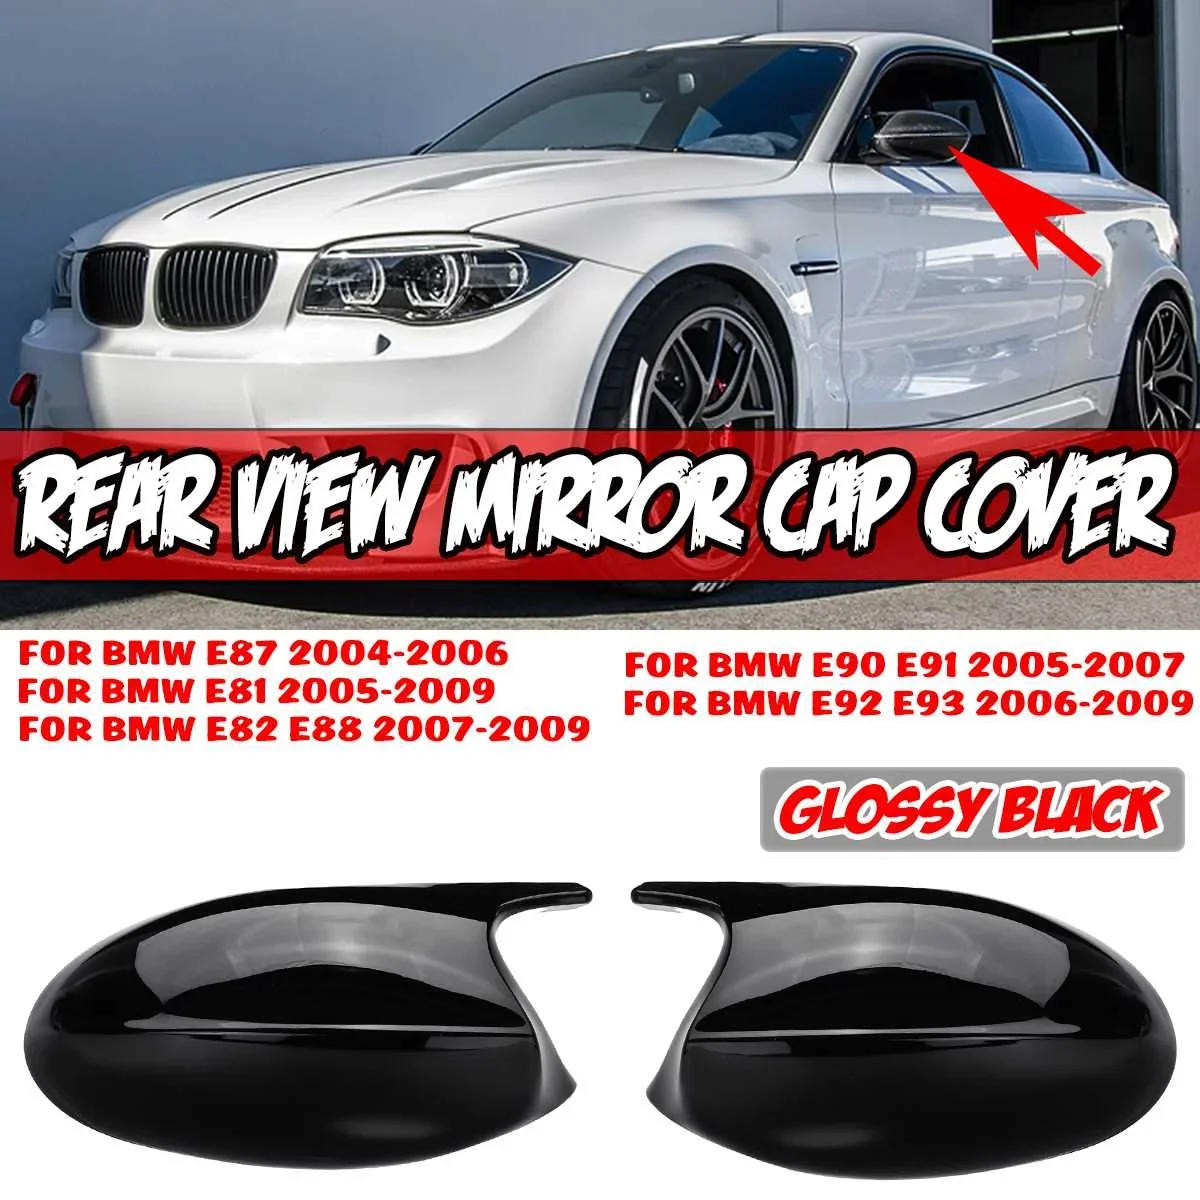 

2pcs Glossy Black Car Rearview Mirror Cover Side Mirror Caps Replacement For BMW E81 E82 E87 E88 E90 E91 E92 E93 Pre-Facelifted